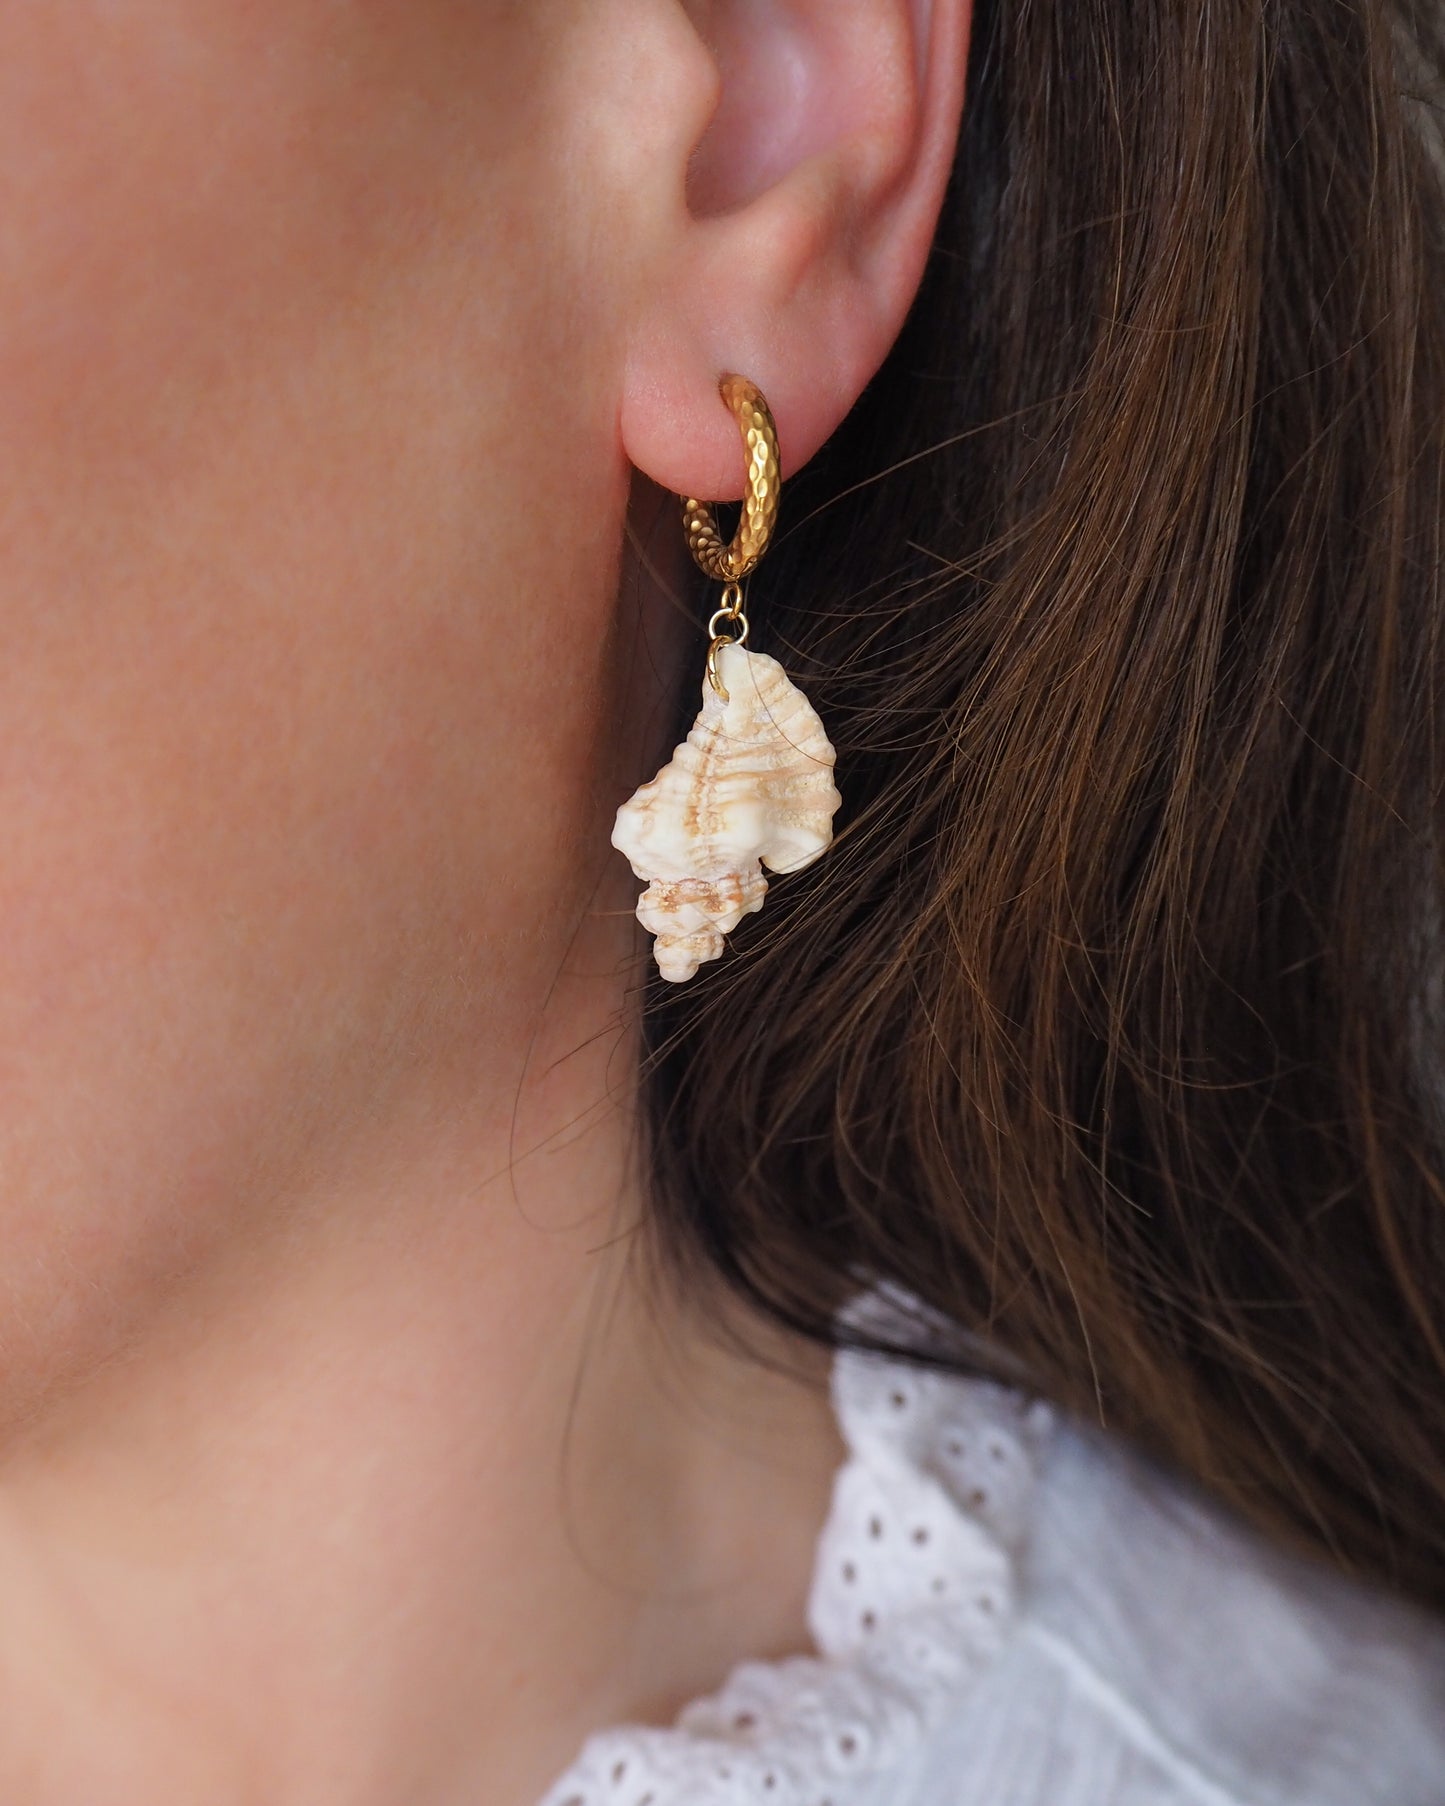 Gold Sting Winkle Shell Earrings with Gold Hoop Hooks in ear of model